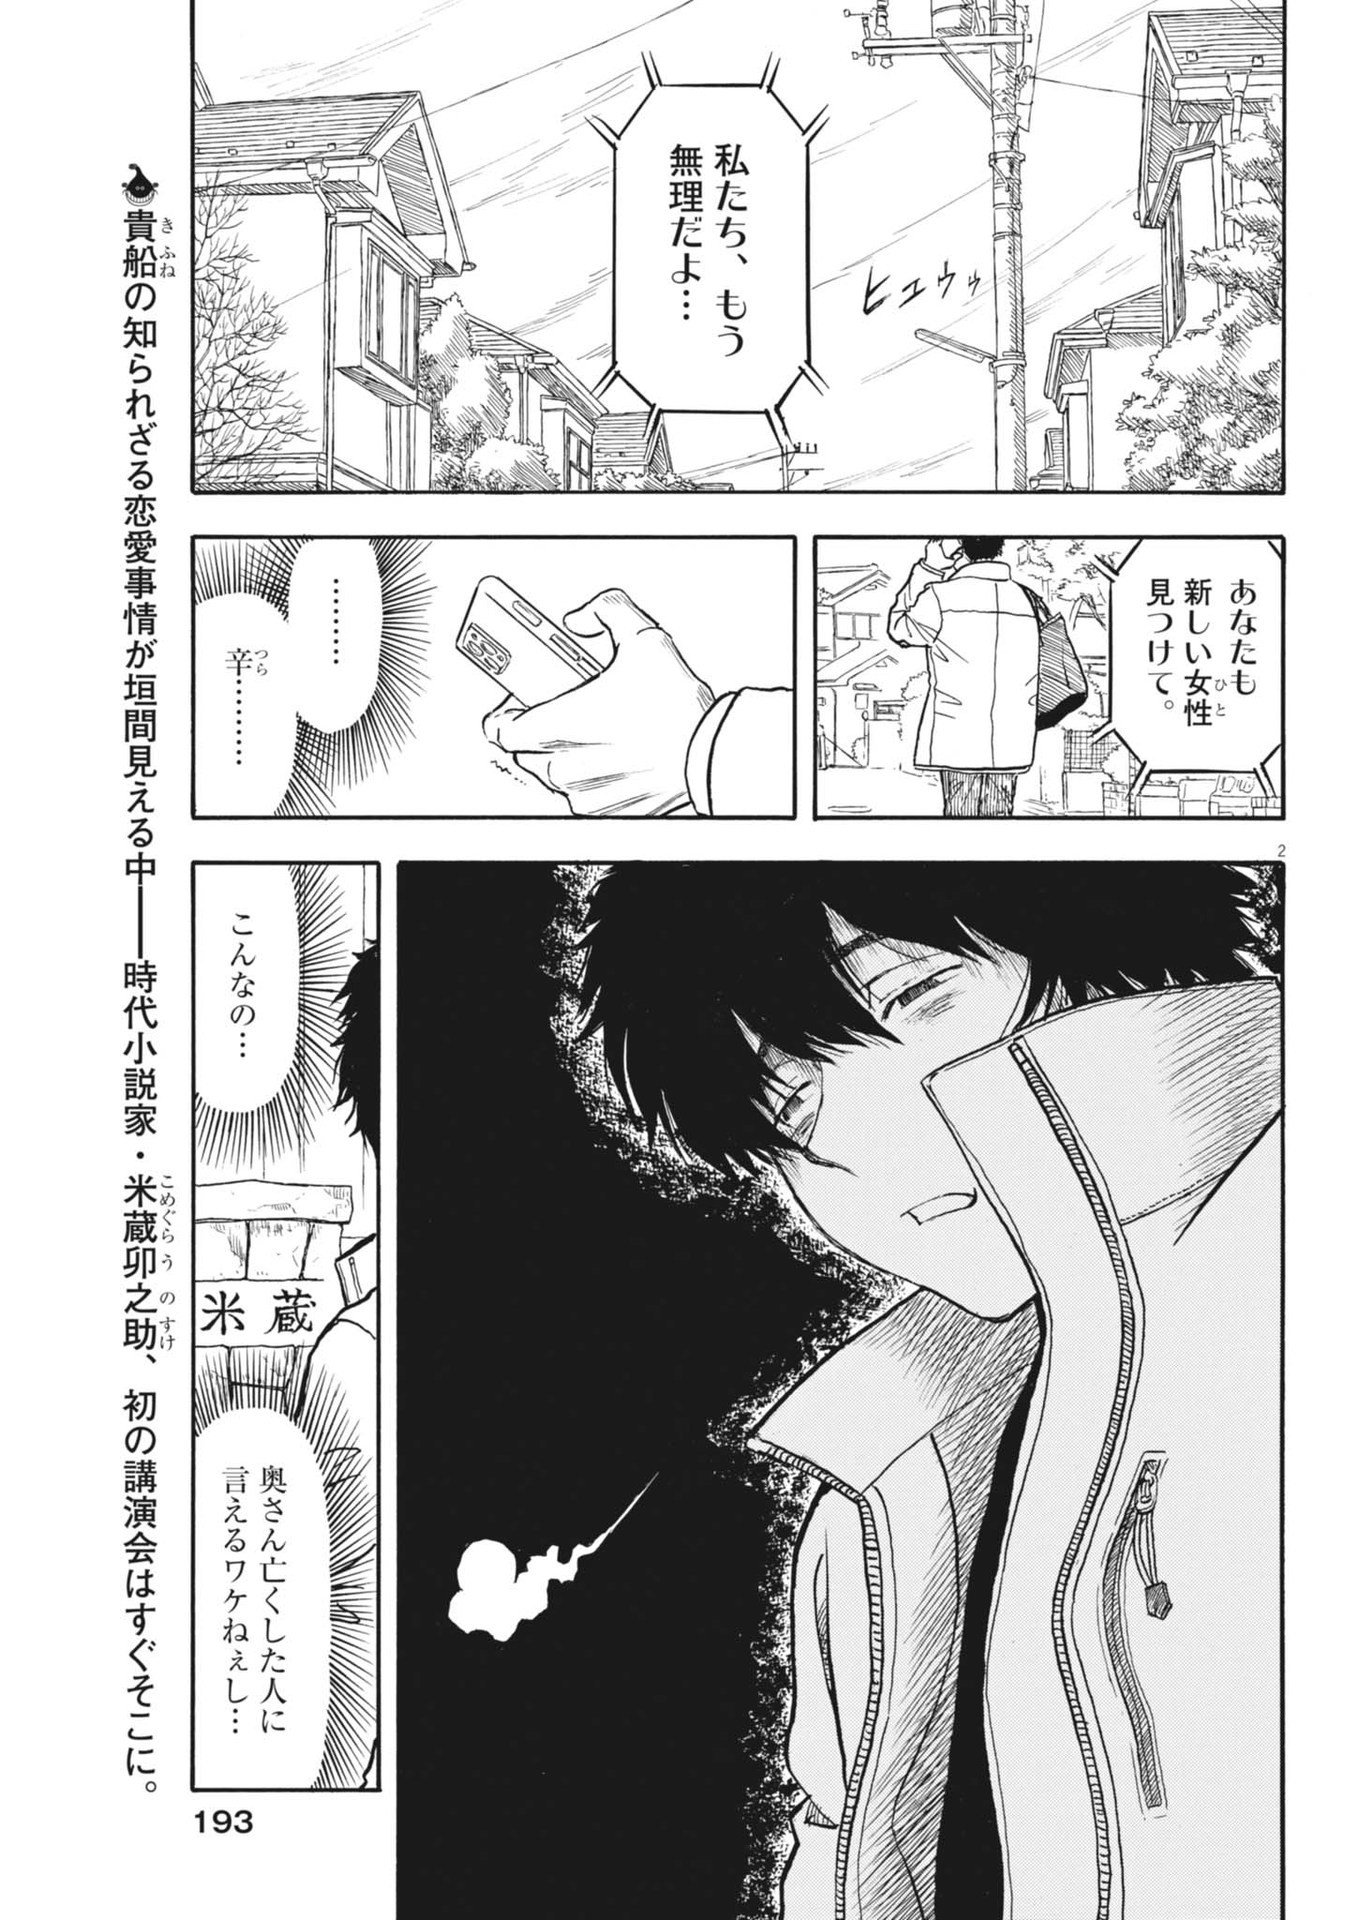 Komegura Fuufu no Recipe-chou - Chapter 40 - Page 2